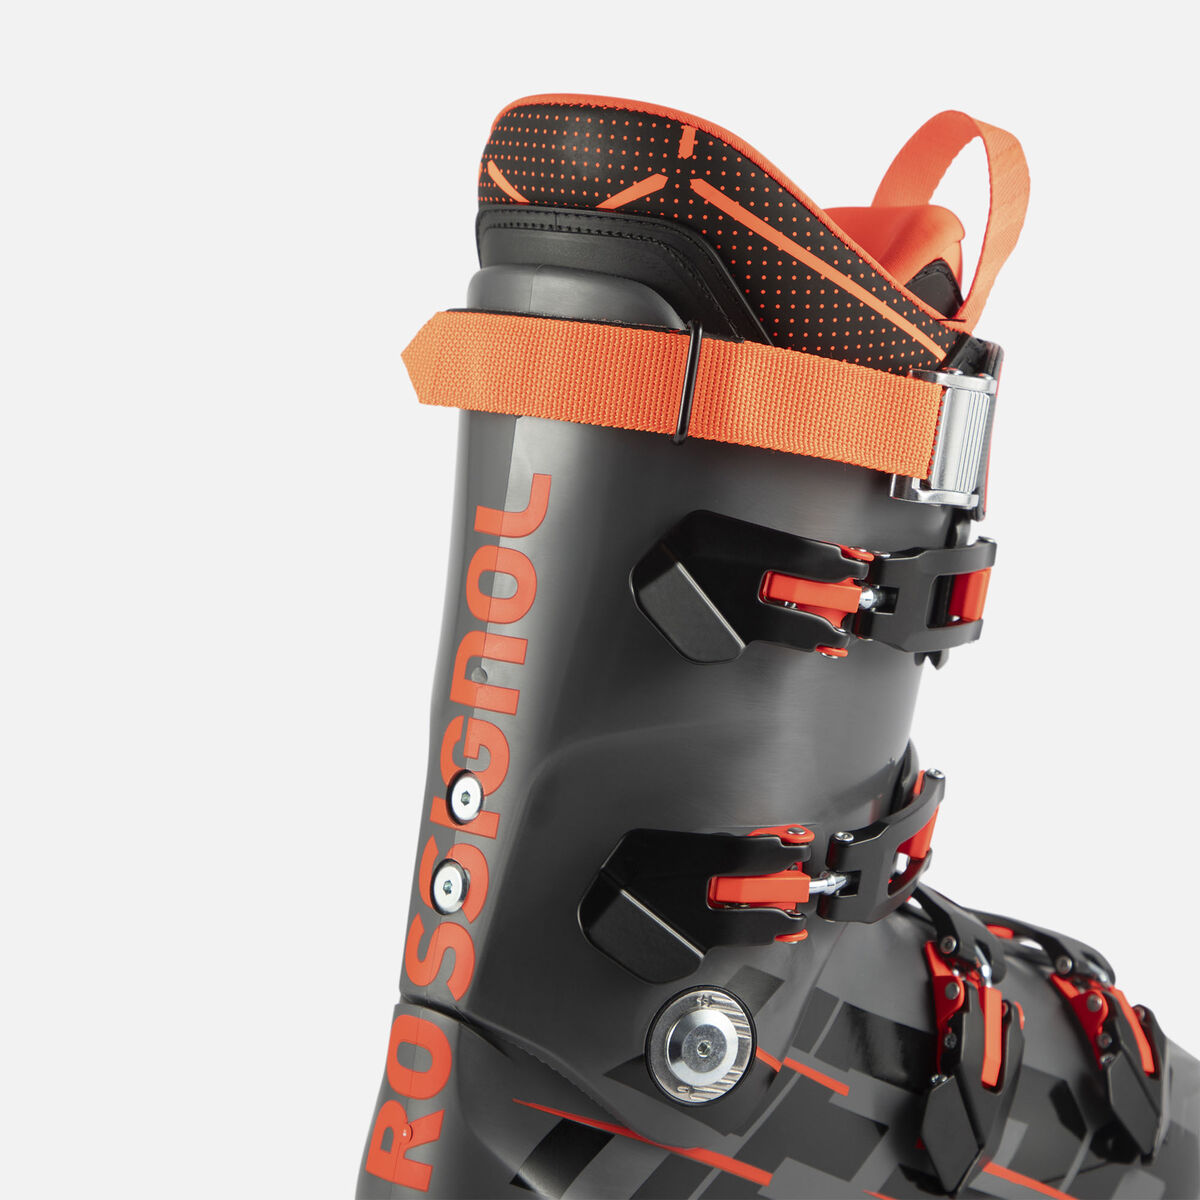 Unisex Racing Ski Boots Hero World Cup 130 Medium